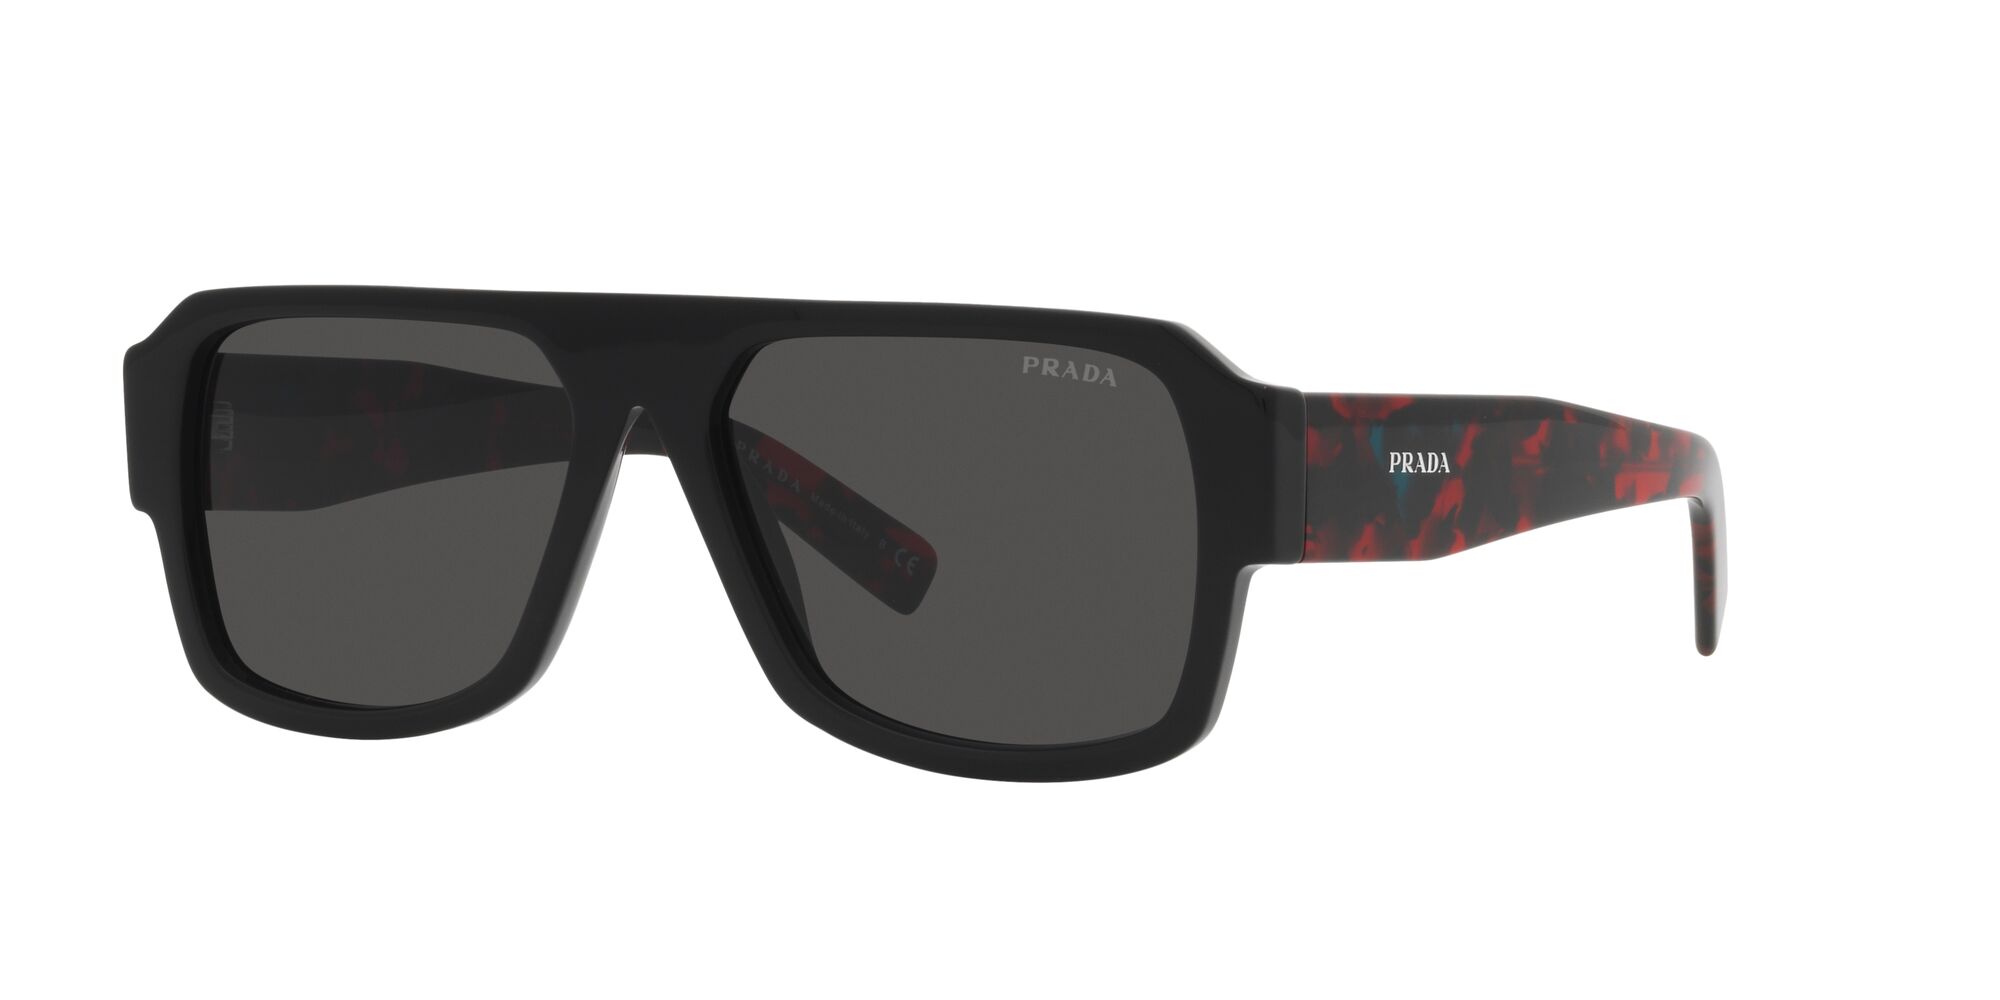 Prada Pr A06s men Sunglasses online sale